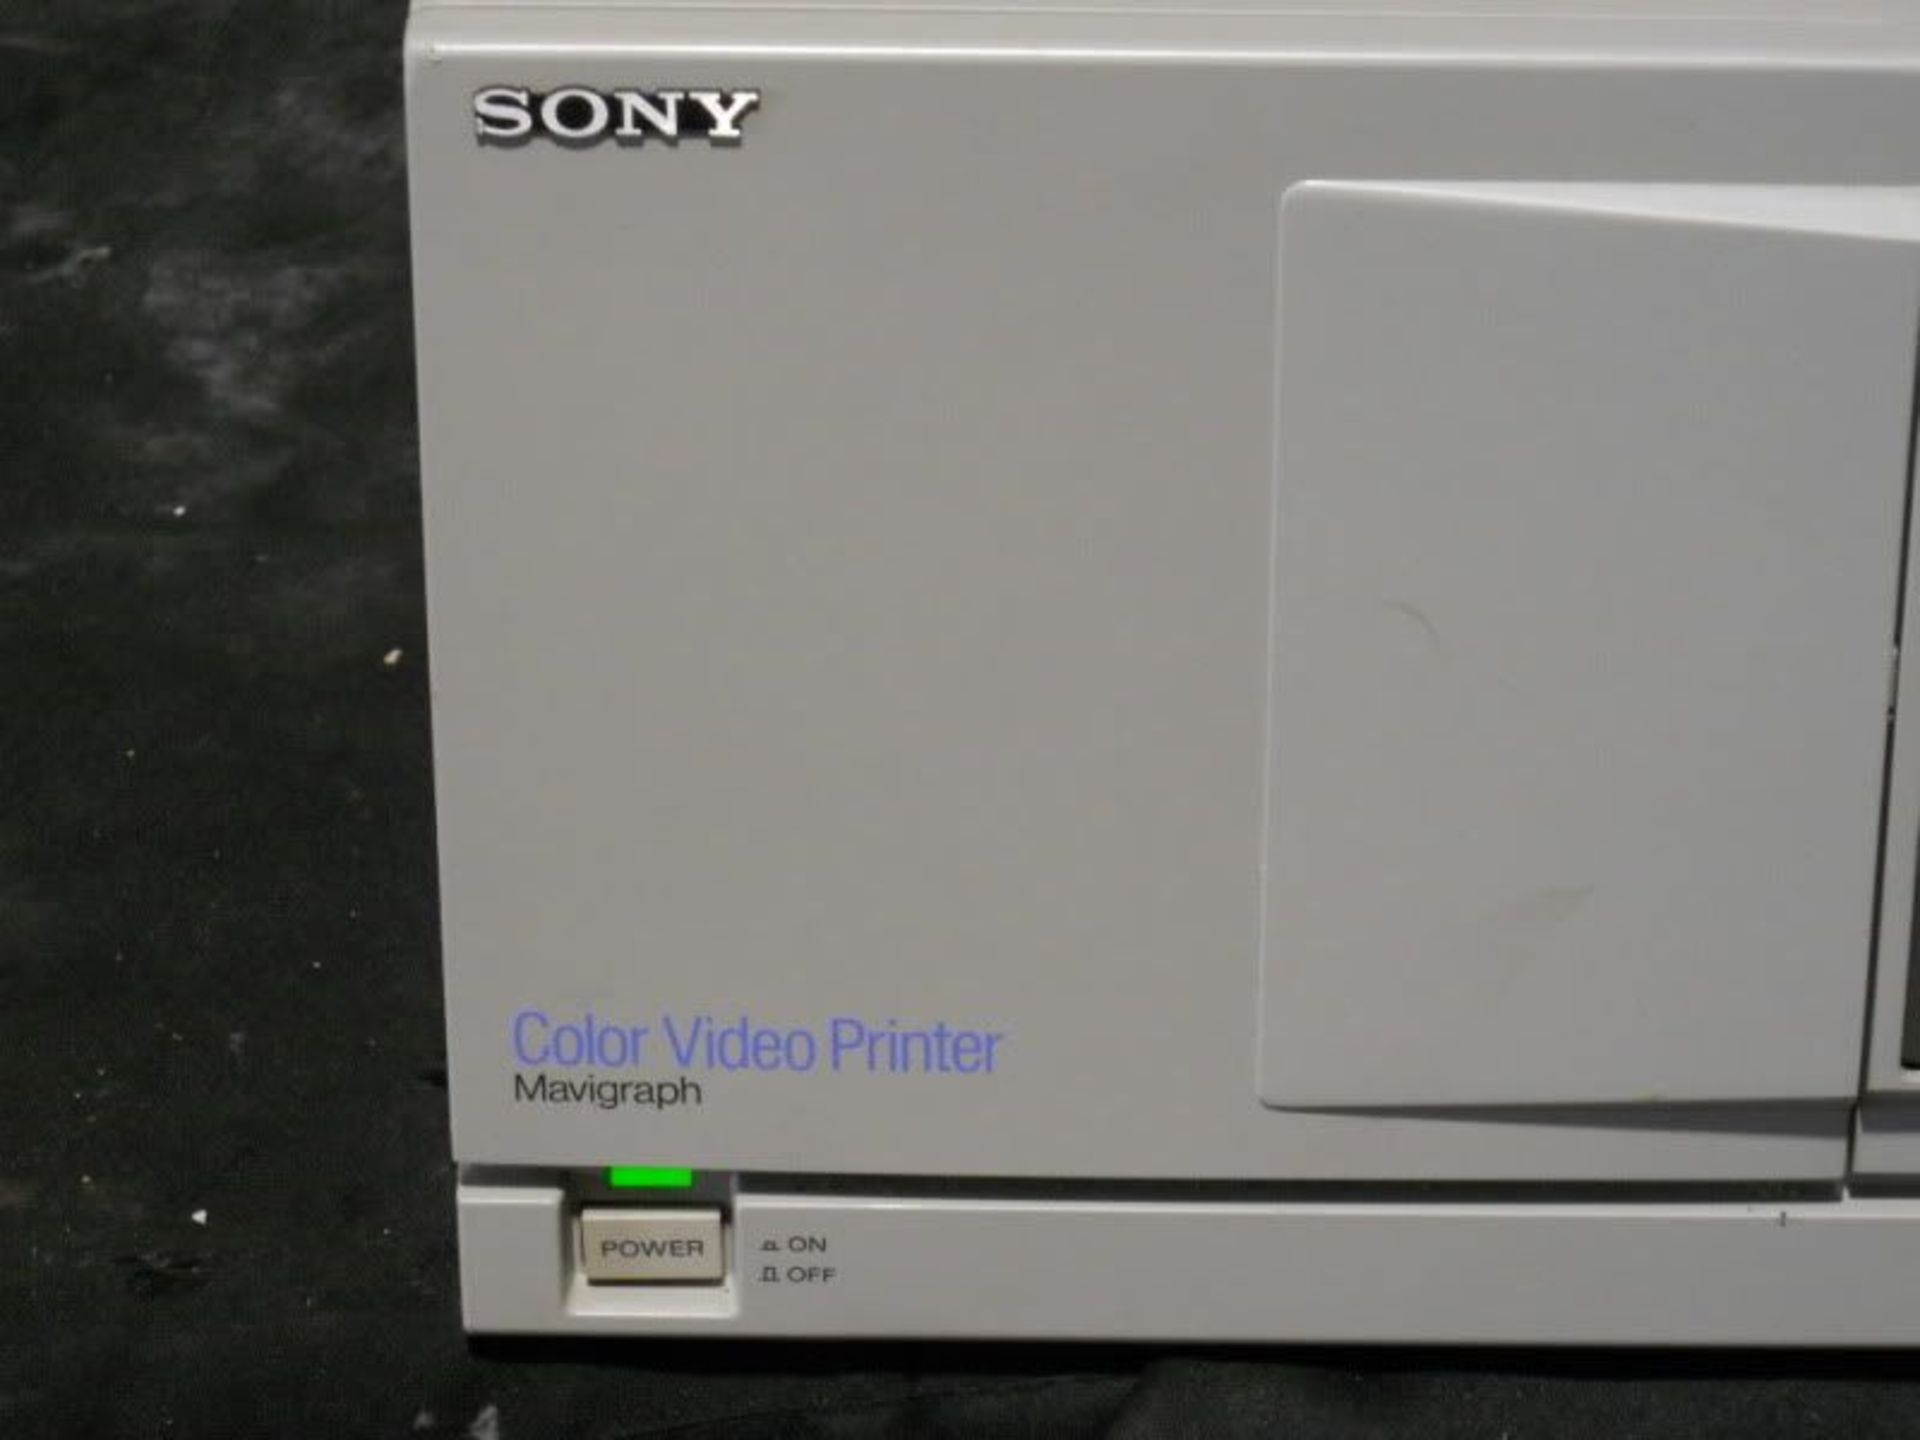 Sony Mavigraph Color Video Printer UP5000, Qty 1, 321469009610 - Image 2 of 11